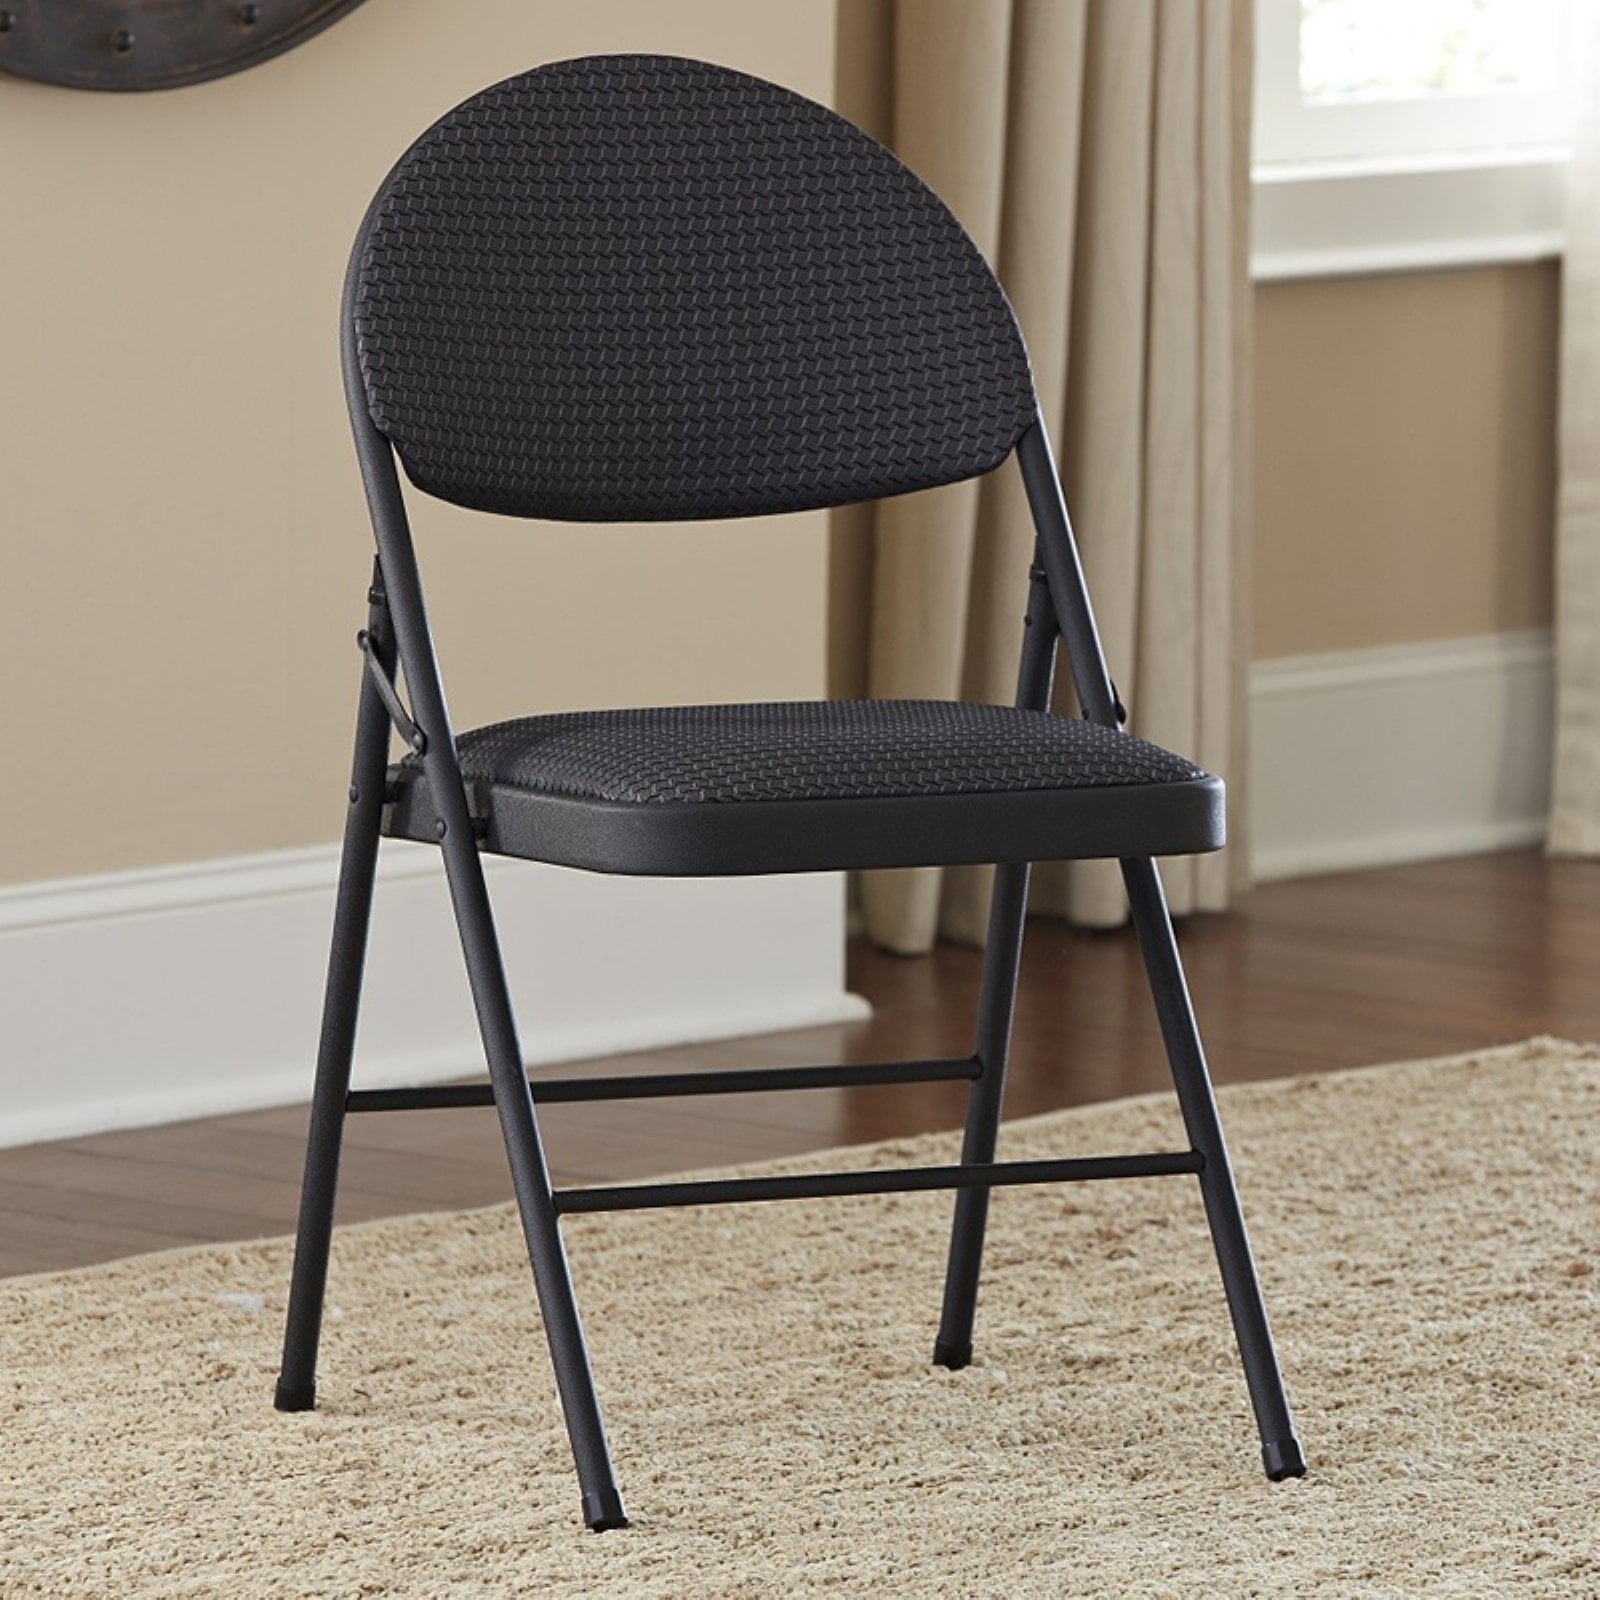  Cosco  XL Comfort Folding  Chairs  4 Pack Walmart com 